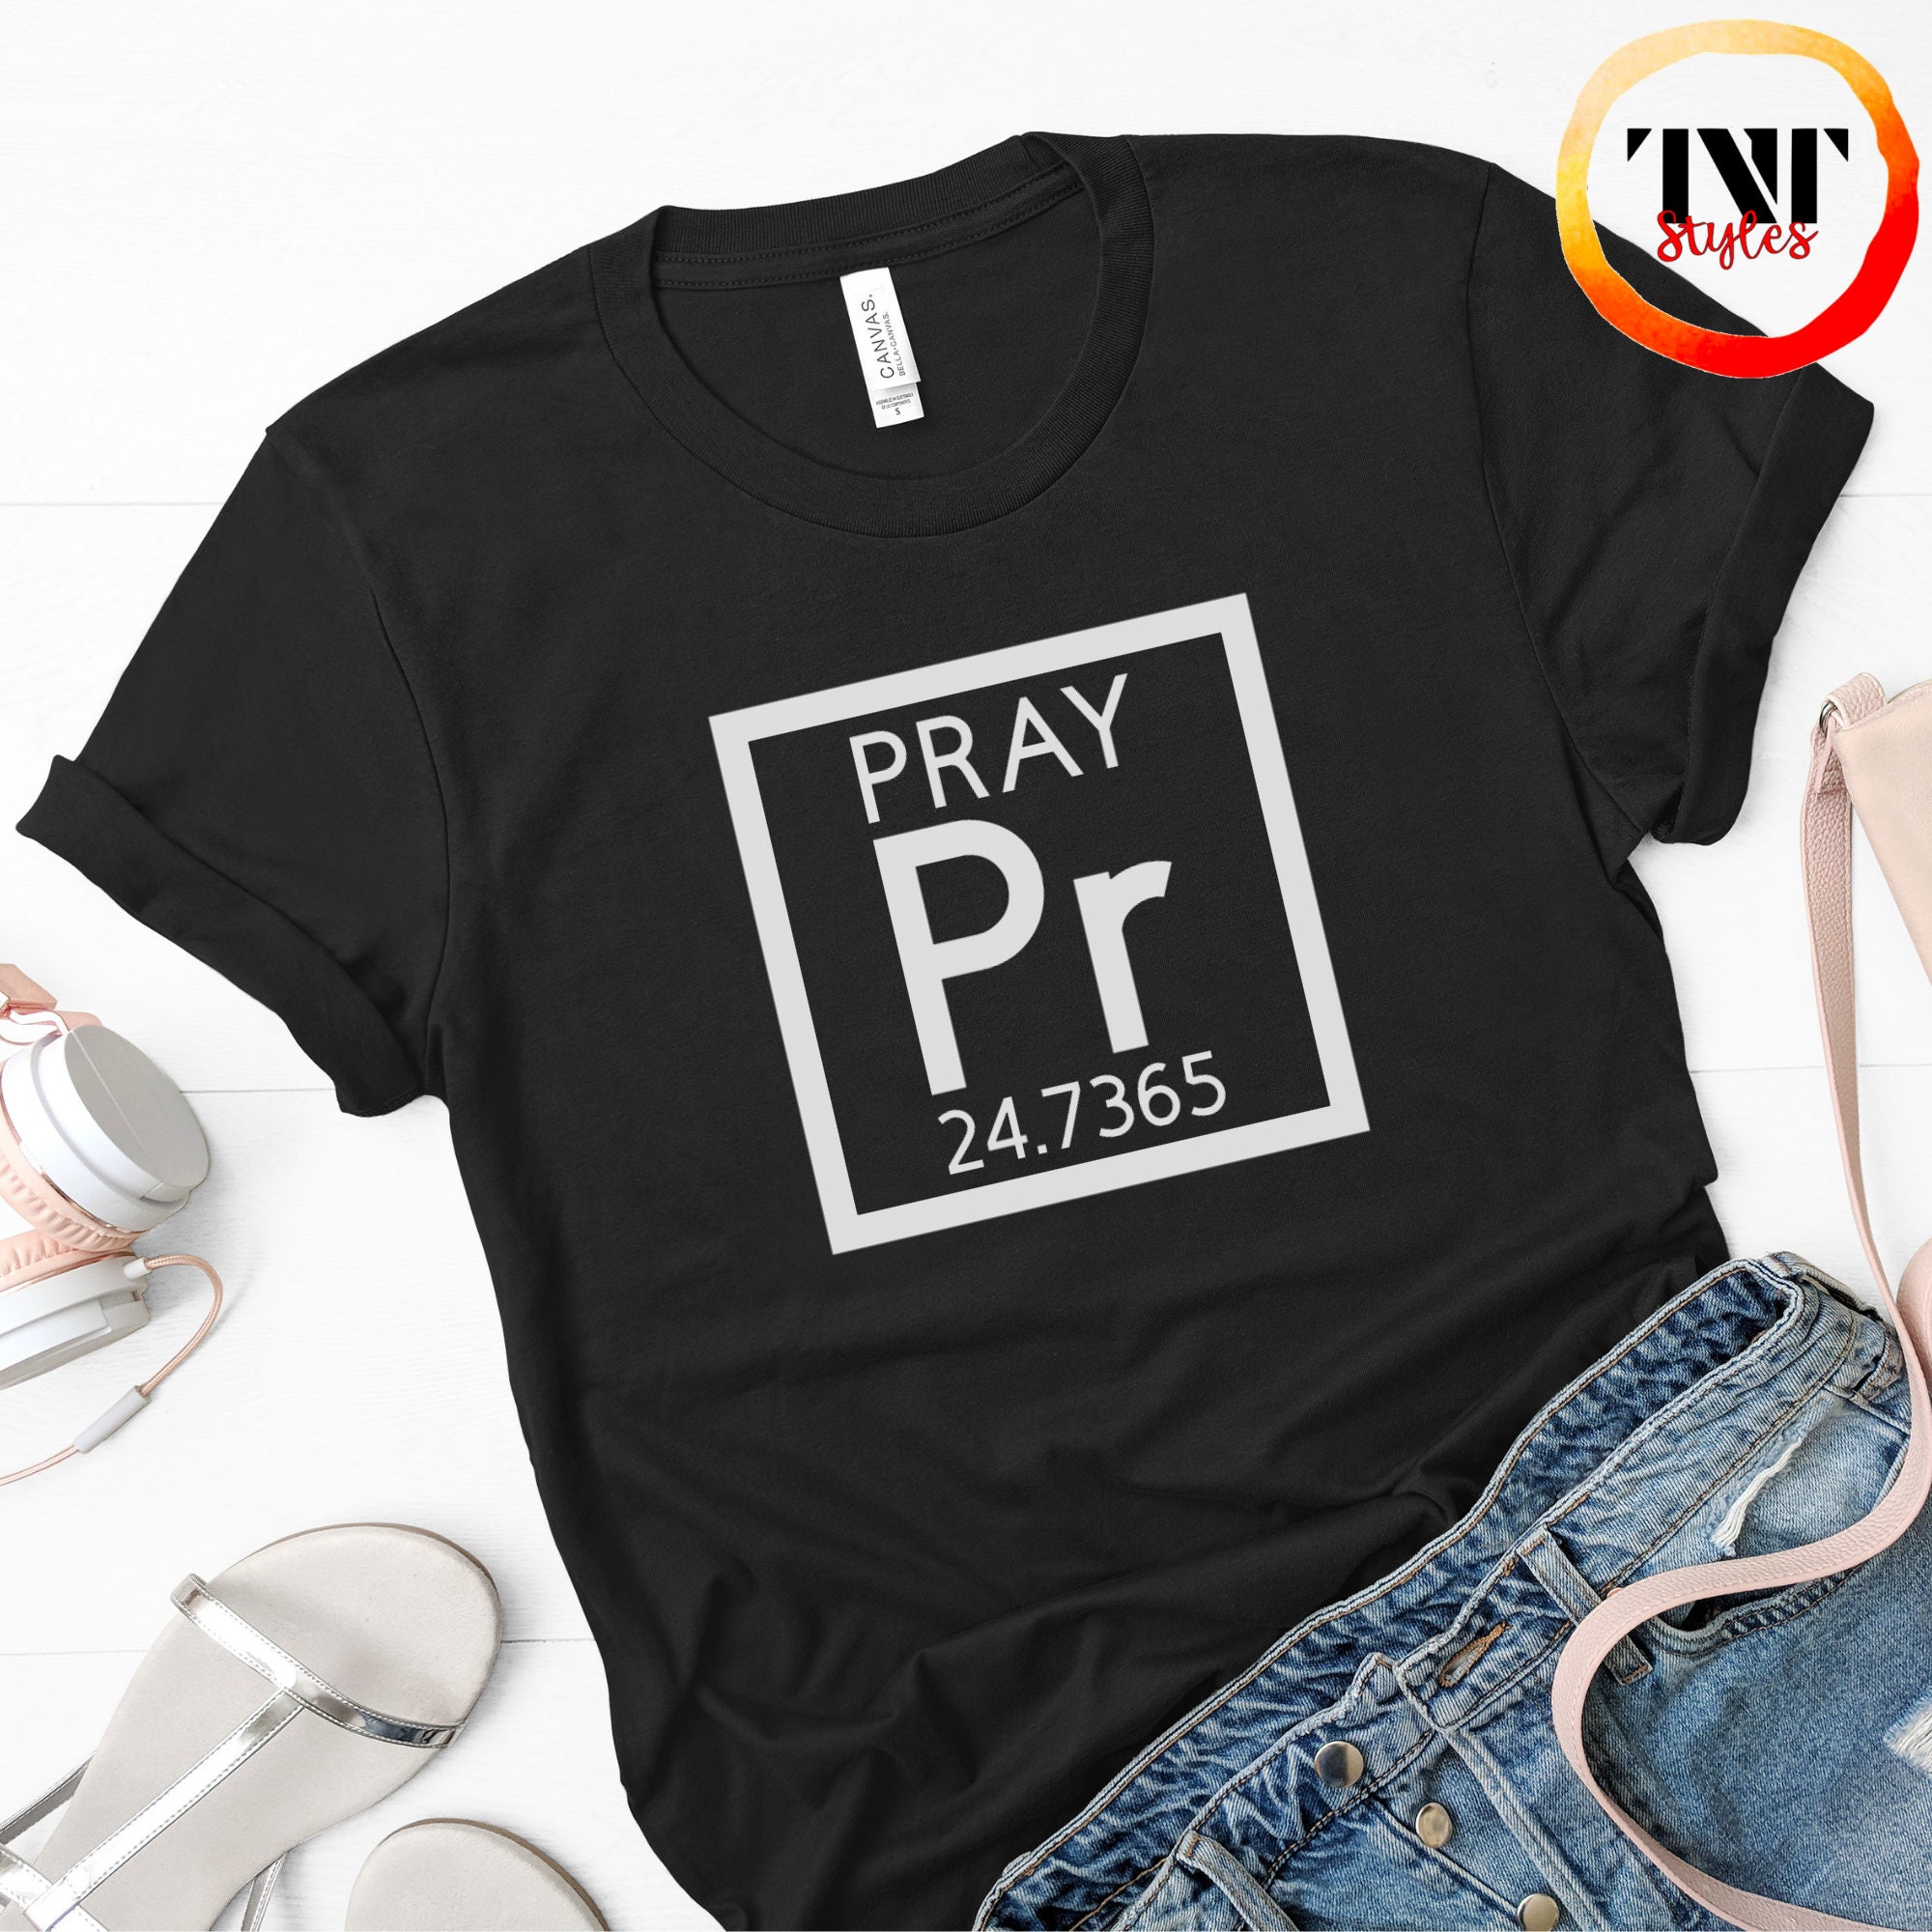 PRAY 24.7365 Science Element Shirt Religious shirt | Etsy